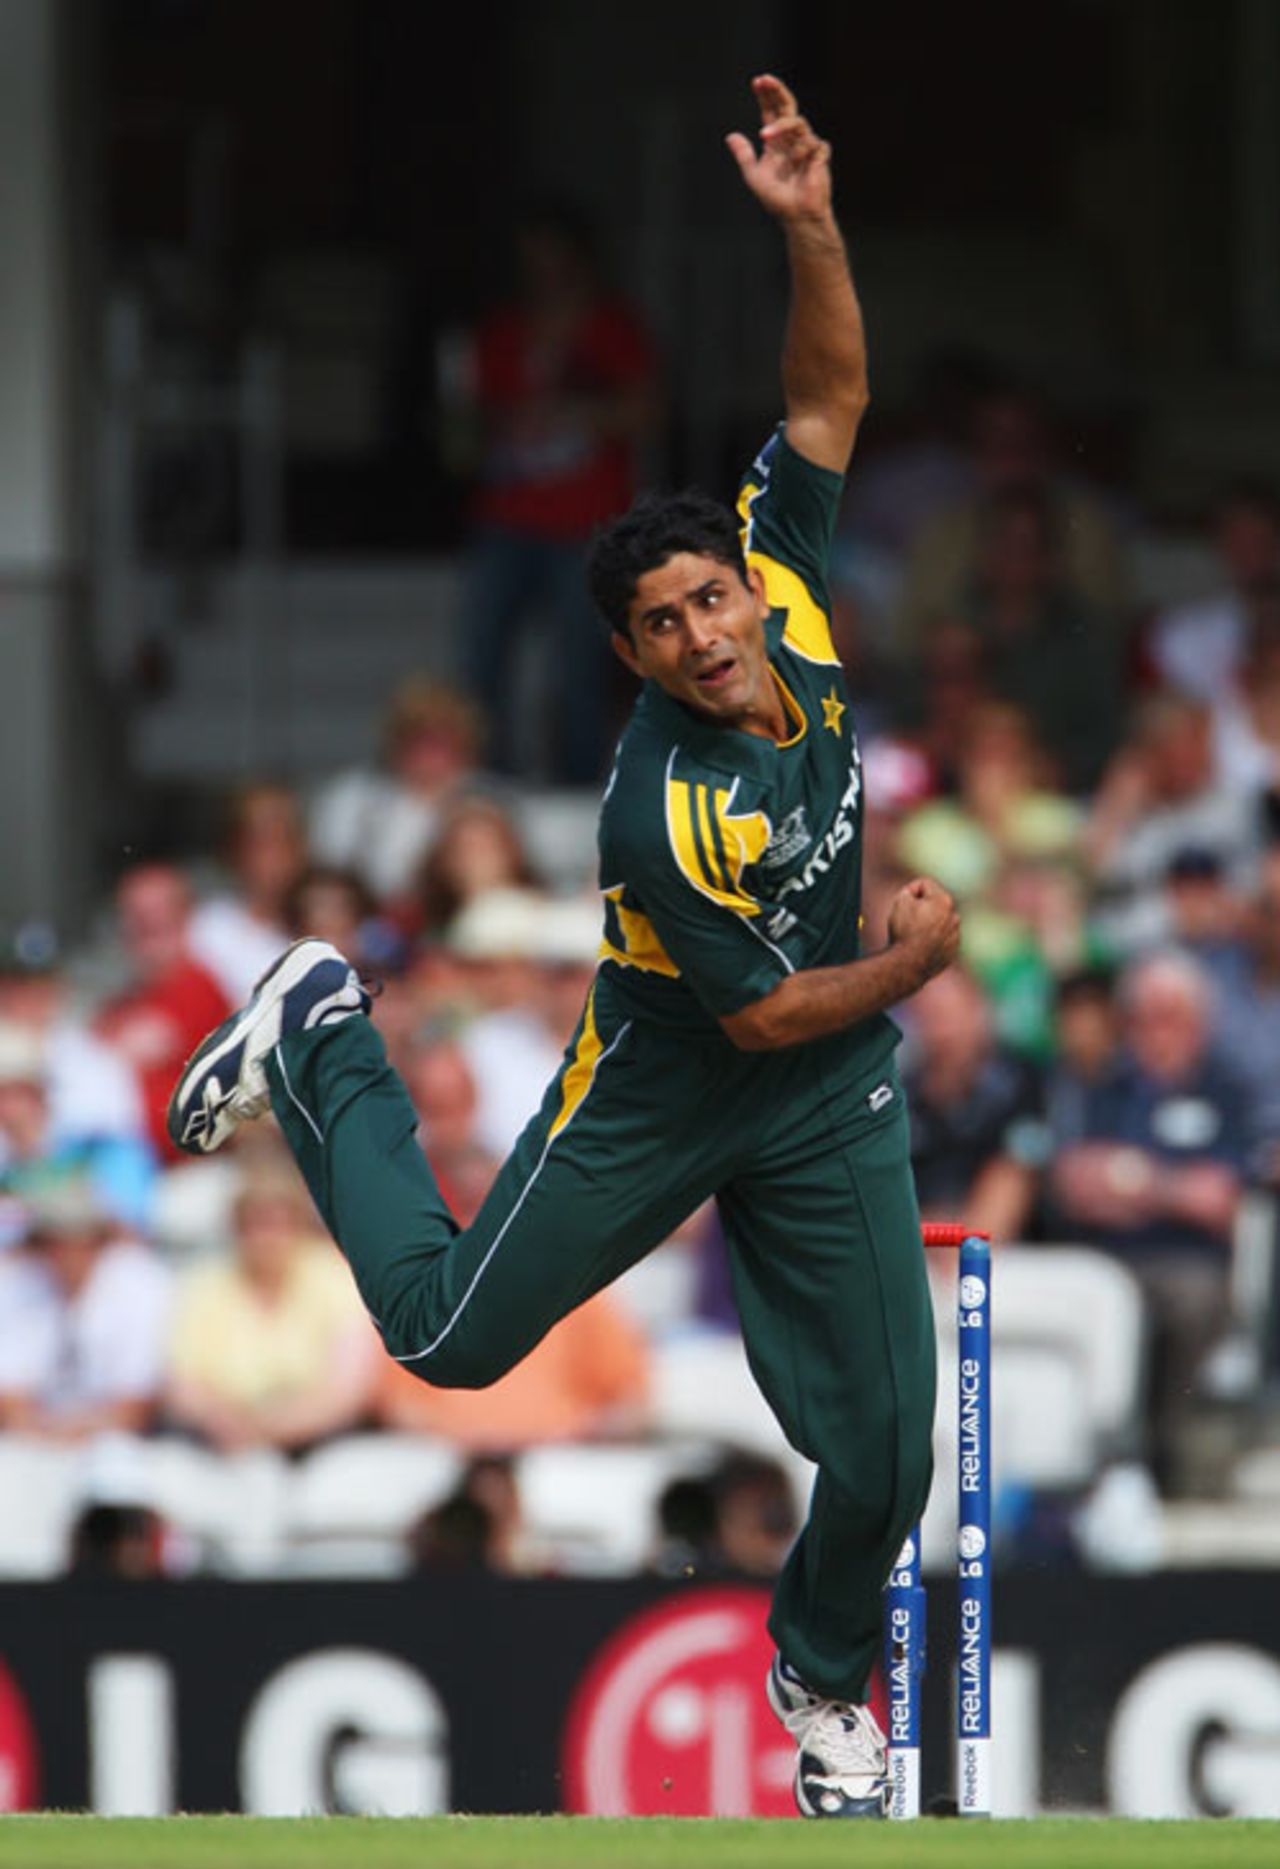 Abdul Razzaq in his delivery stride, New Zealand v Pakistan, ICC World Twenty20 Super Eights, The Oval, June 13, 2009